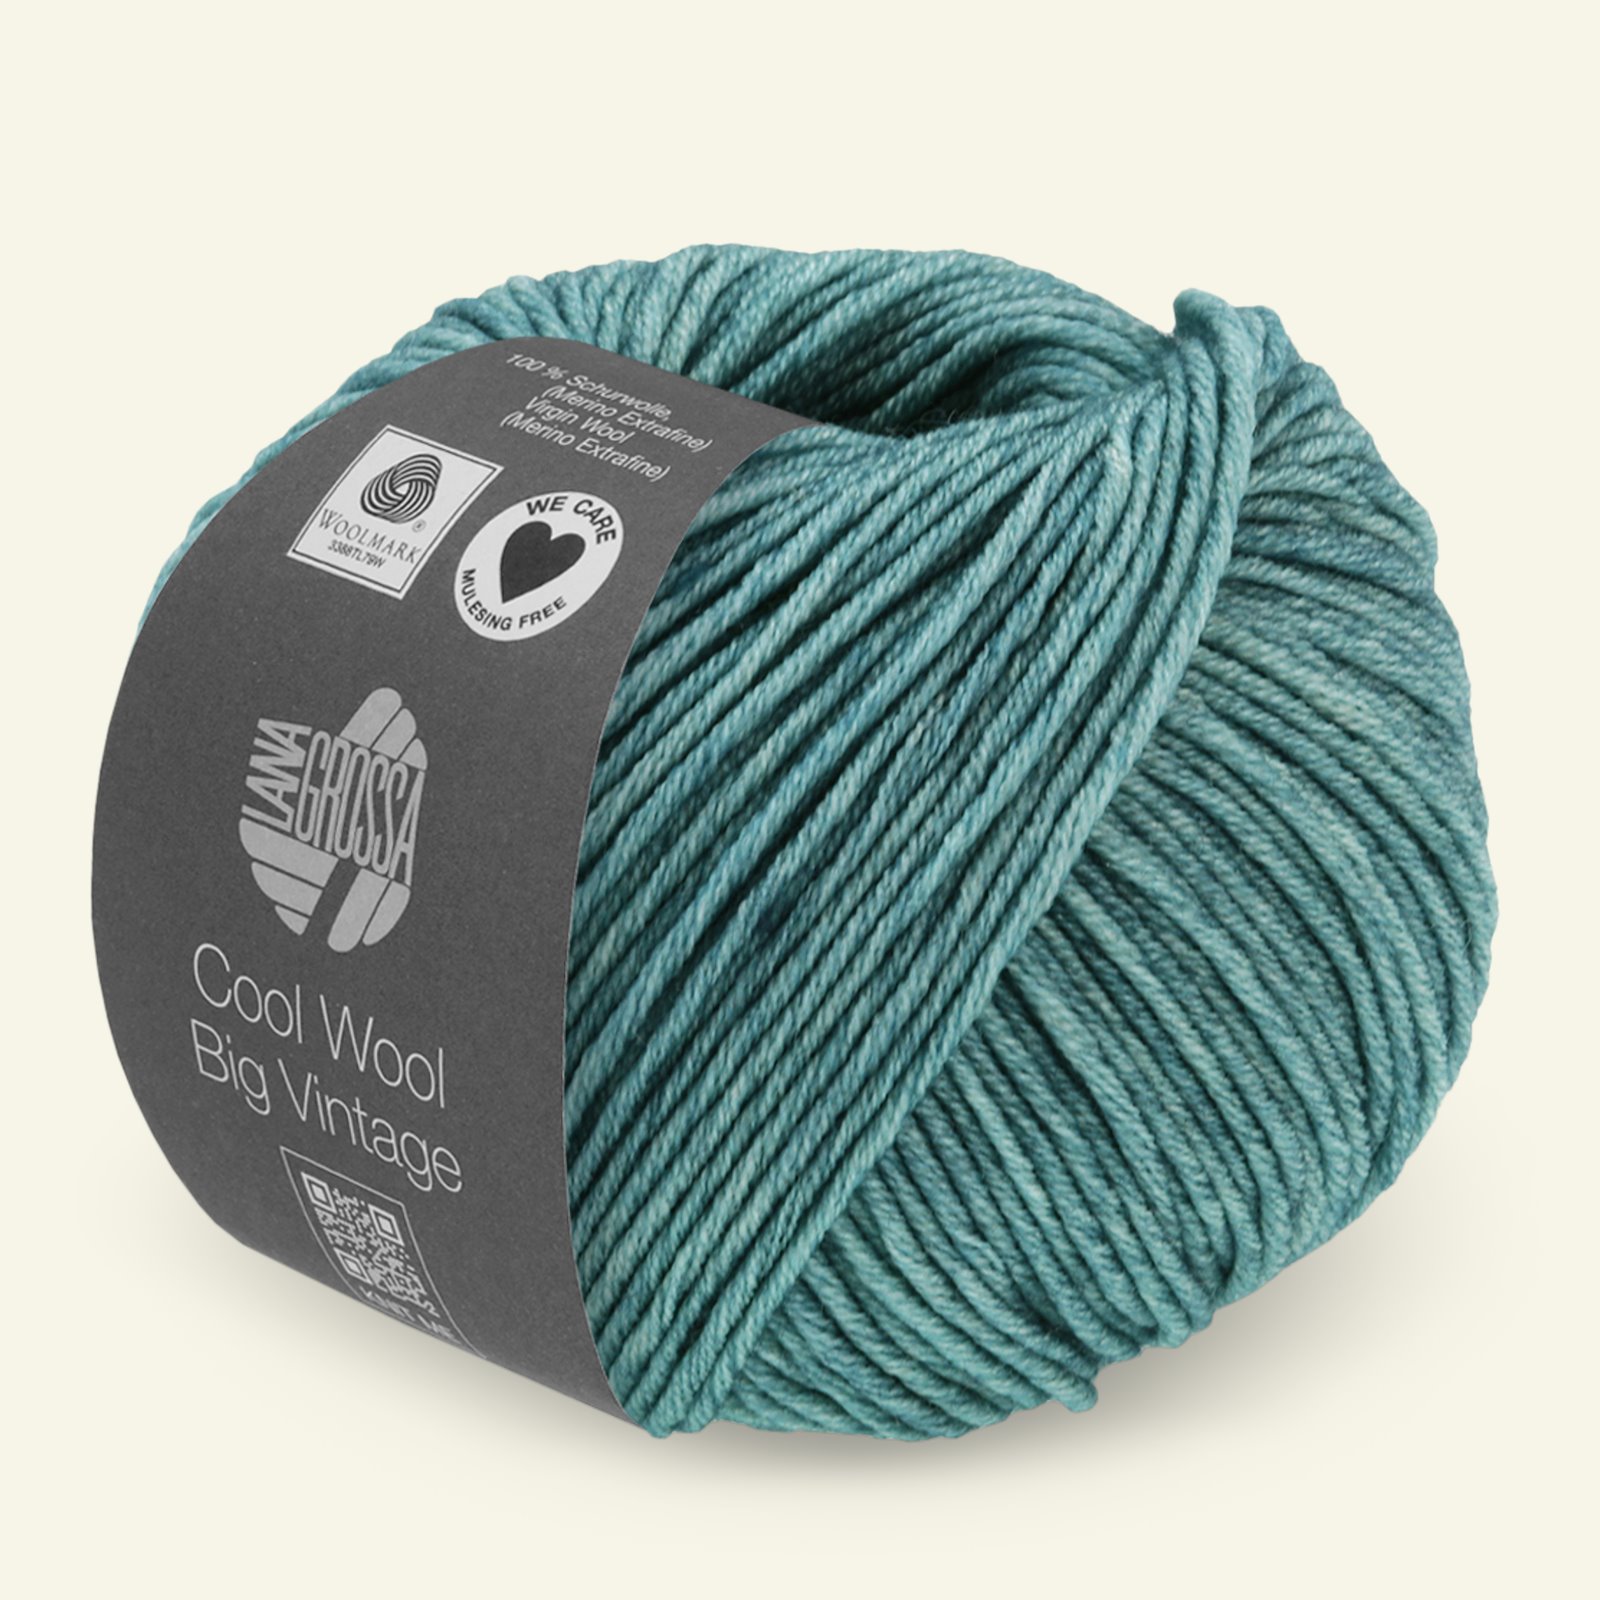 Lana Grossa, extrafine merino wool yarn "Cool Wool Big Vintage", petrol 90001071_pack